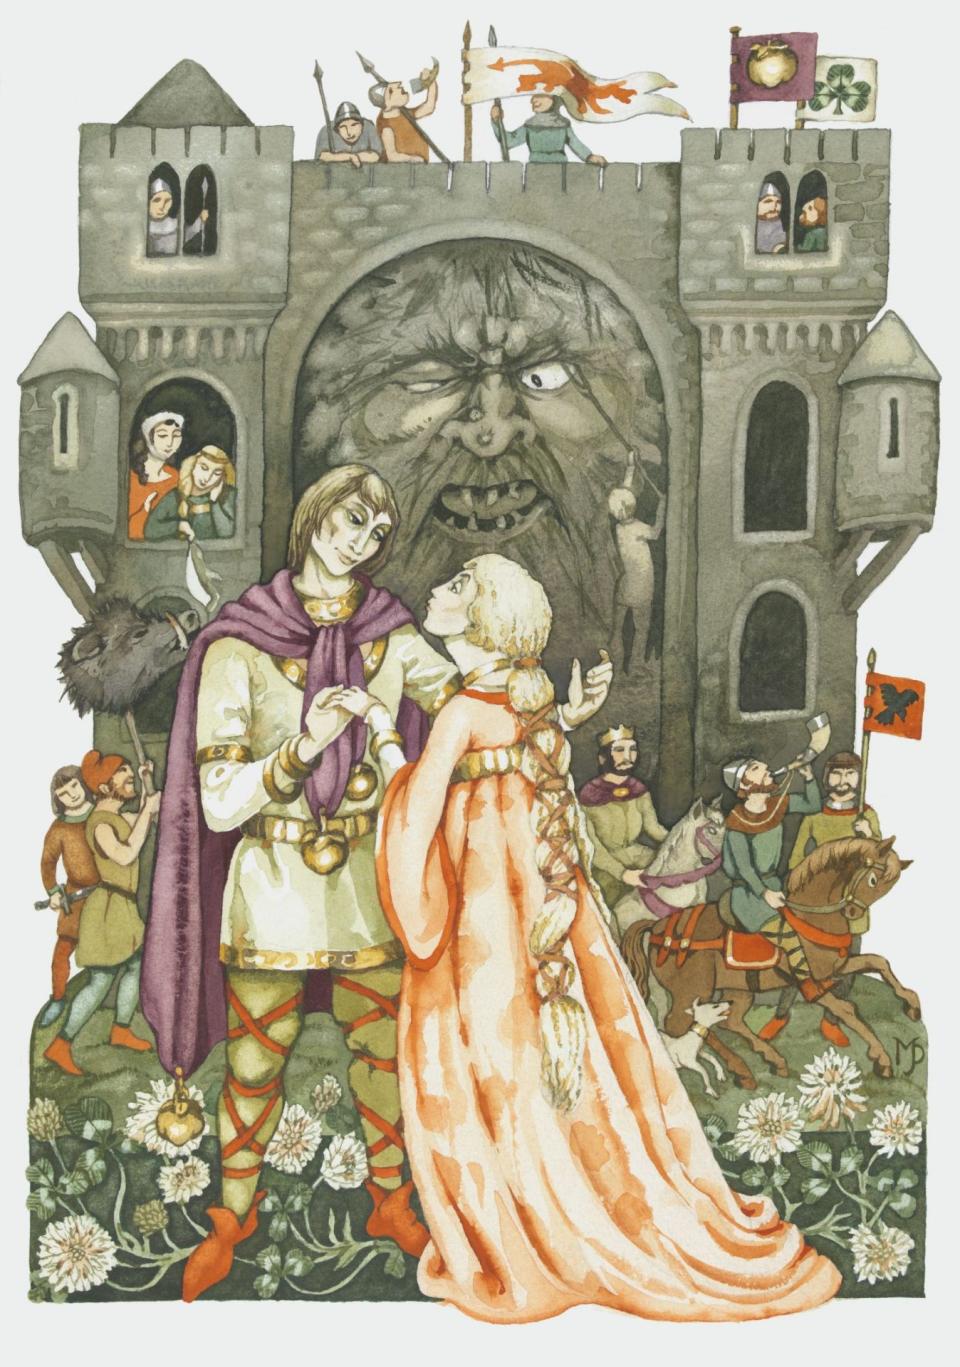 An illustration of the Welsh tale Culhwch ac Olwen